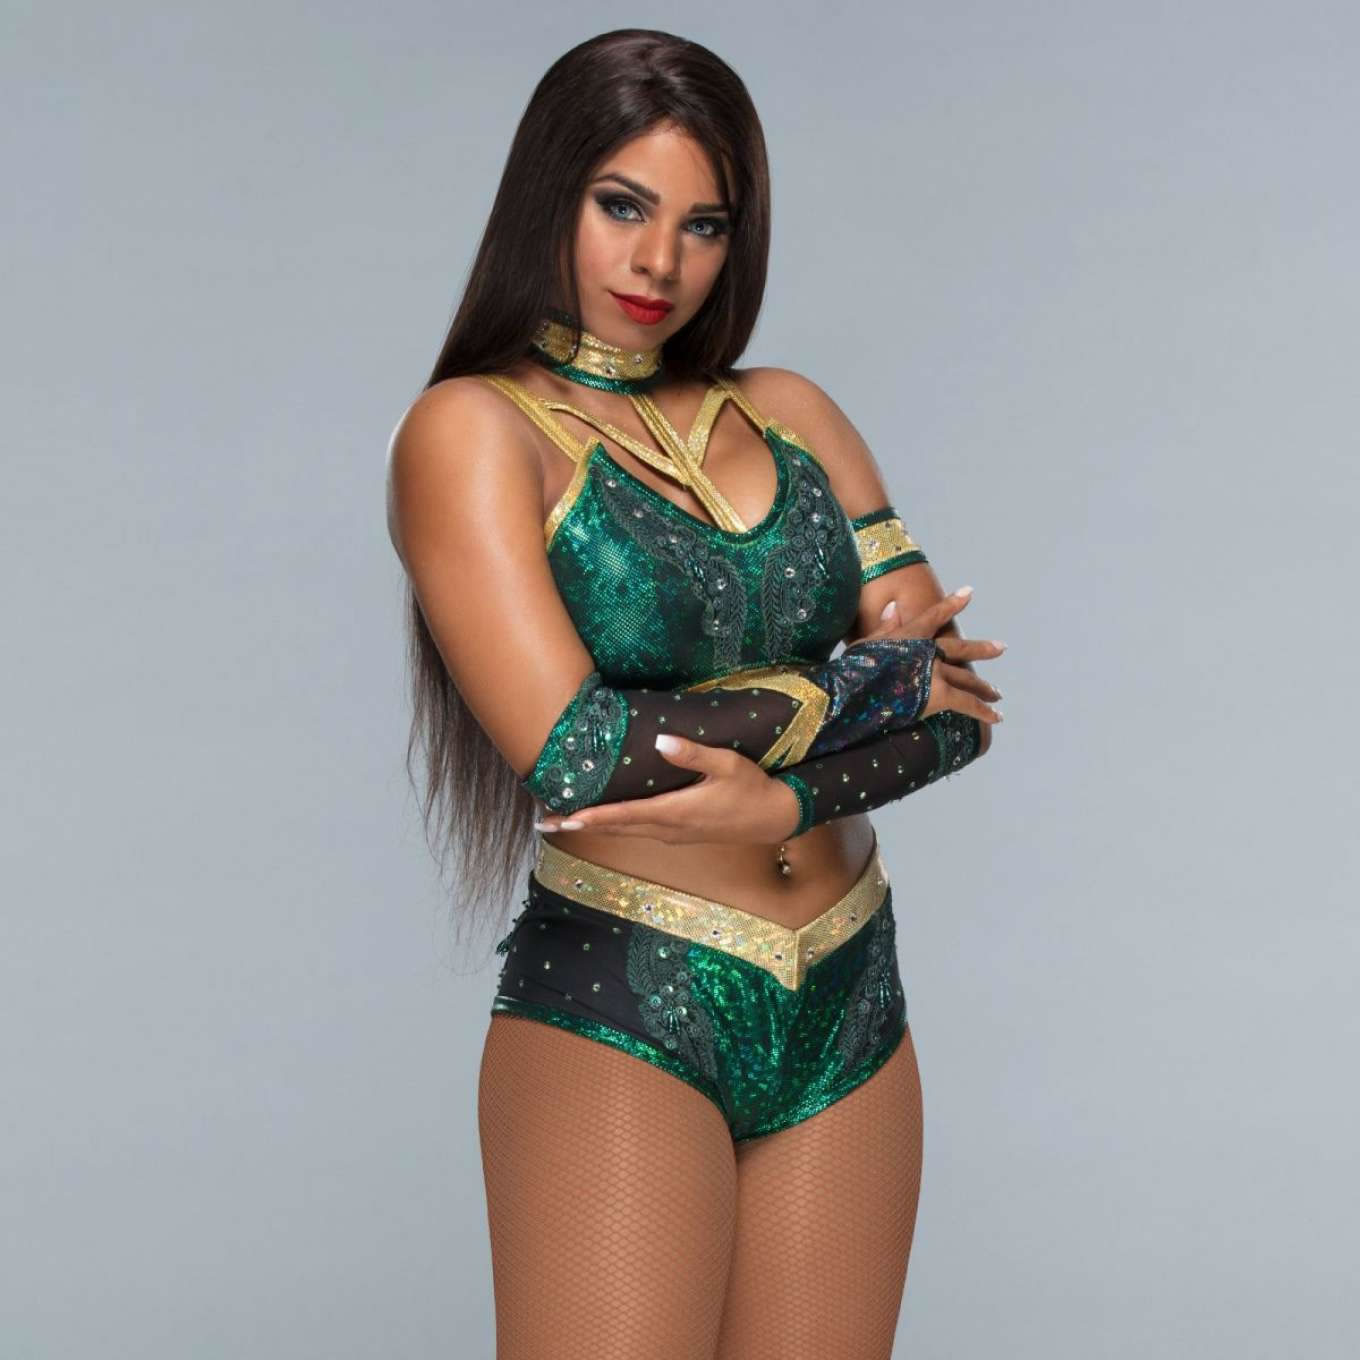 Sexy WWE Diva Renee Michelle.